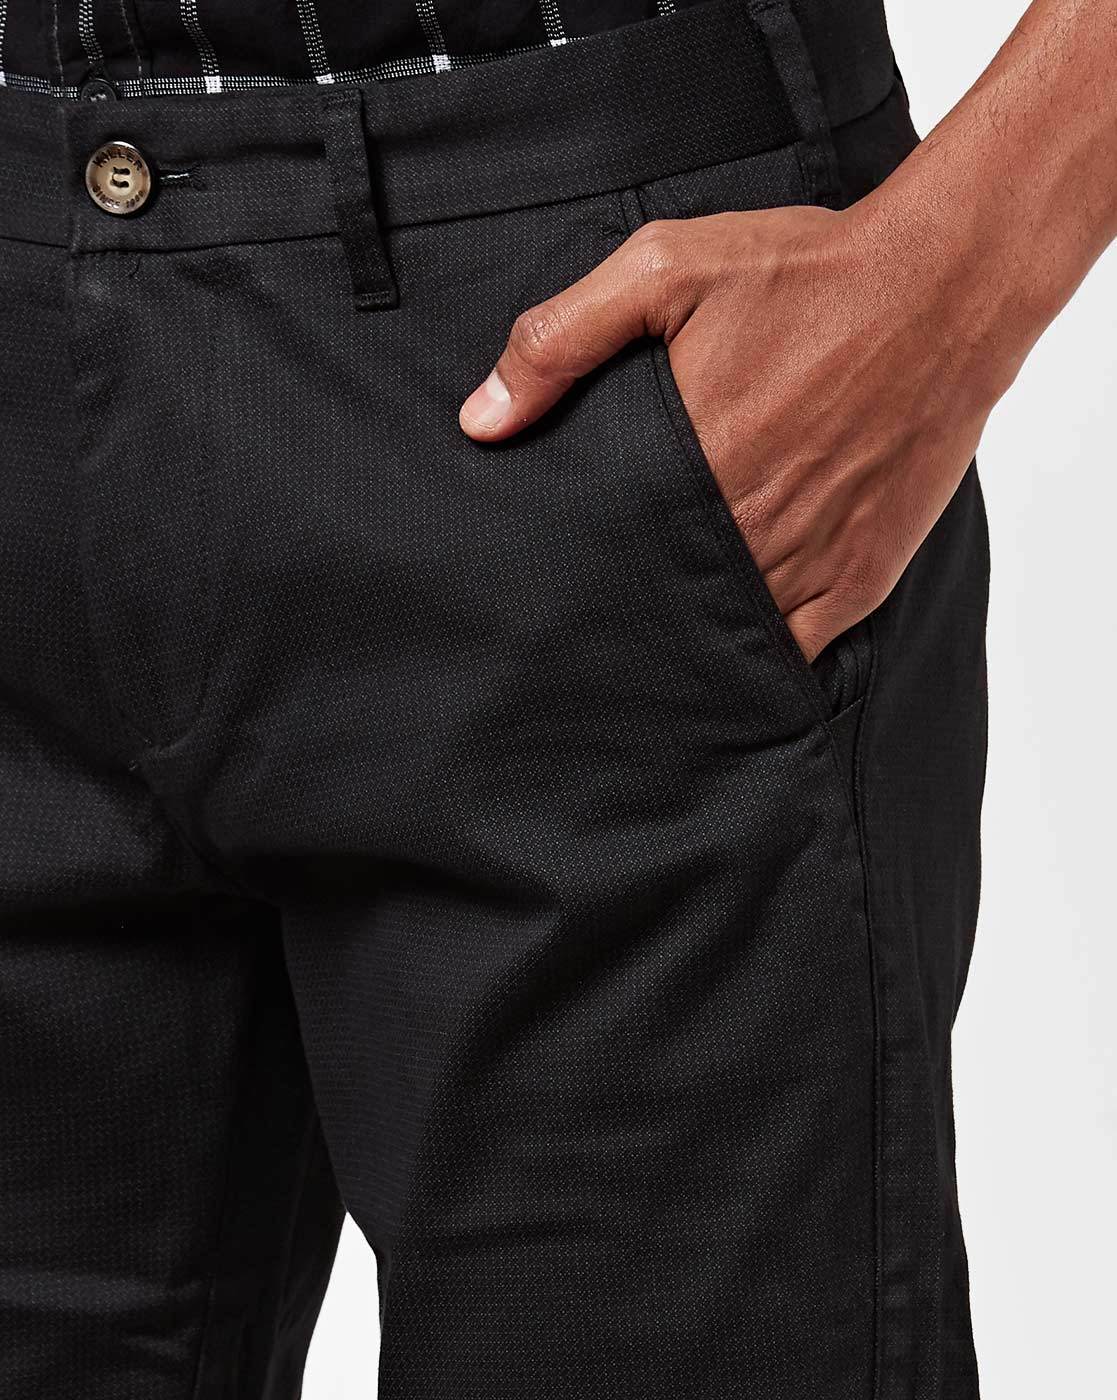 Cleronet 4 Way Plain Strachable Trouser for Men/Track Pent/Regular Fit  Pent/Stretchable Pent/Jean